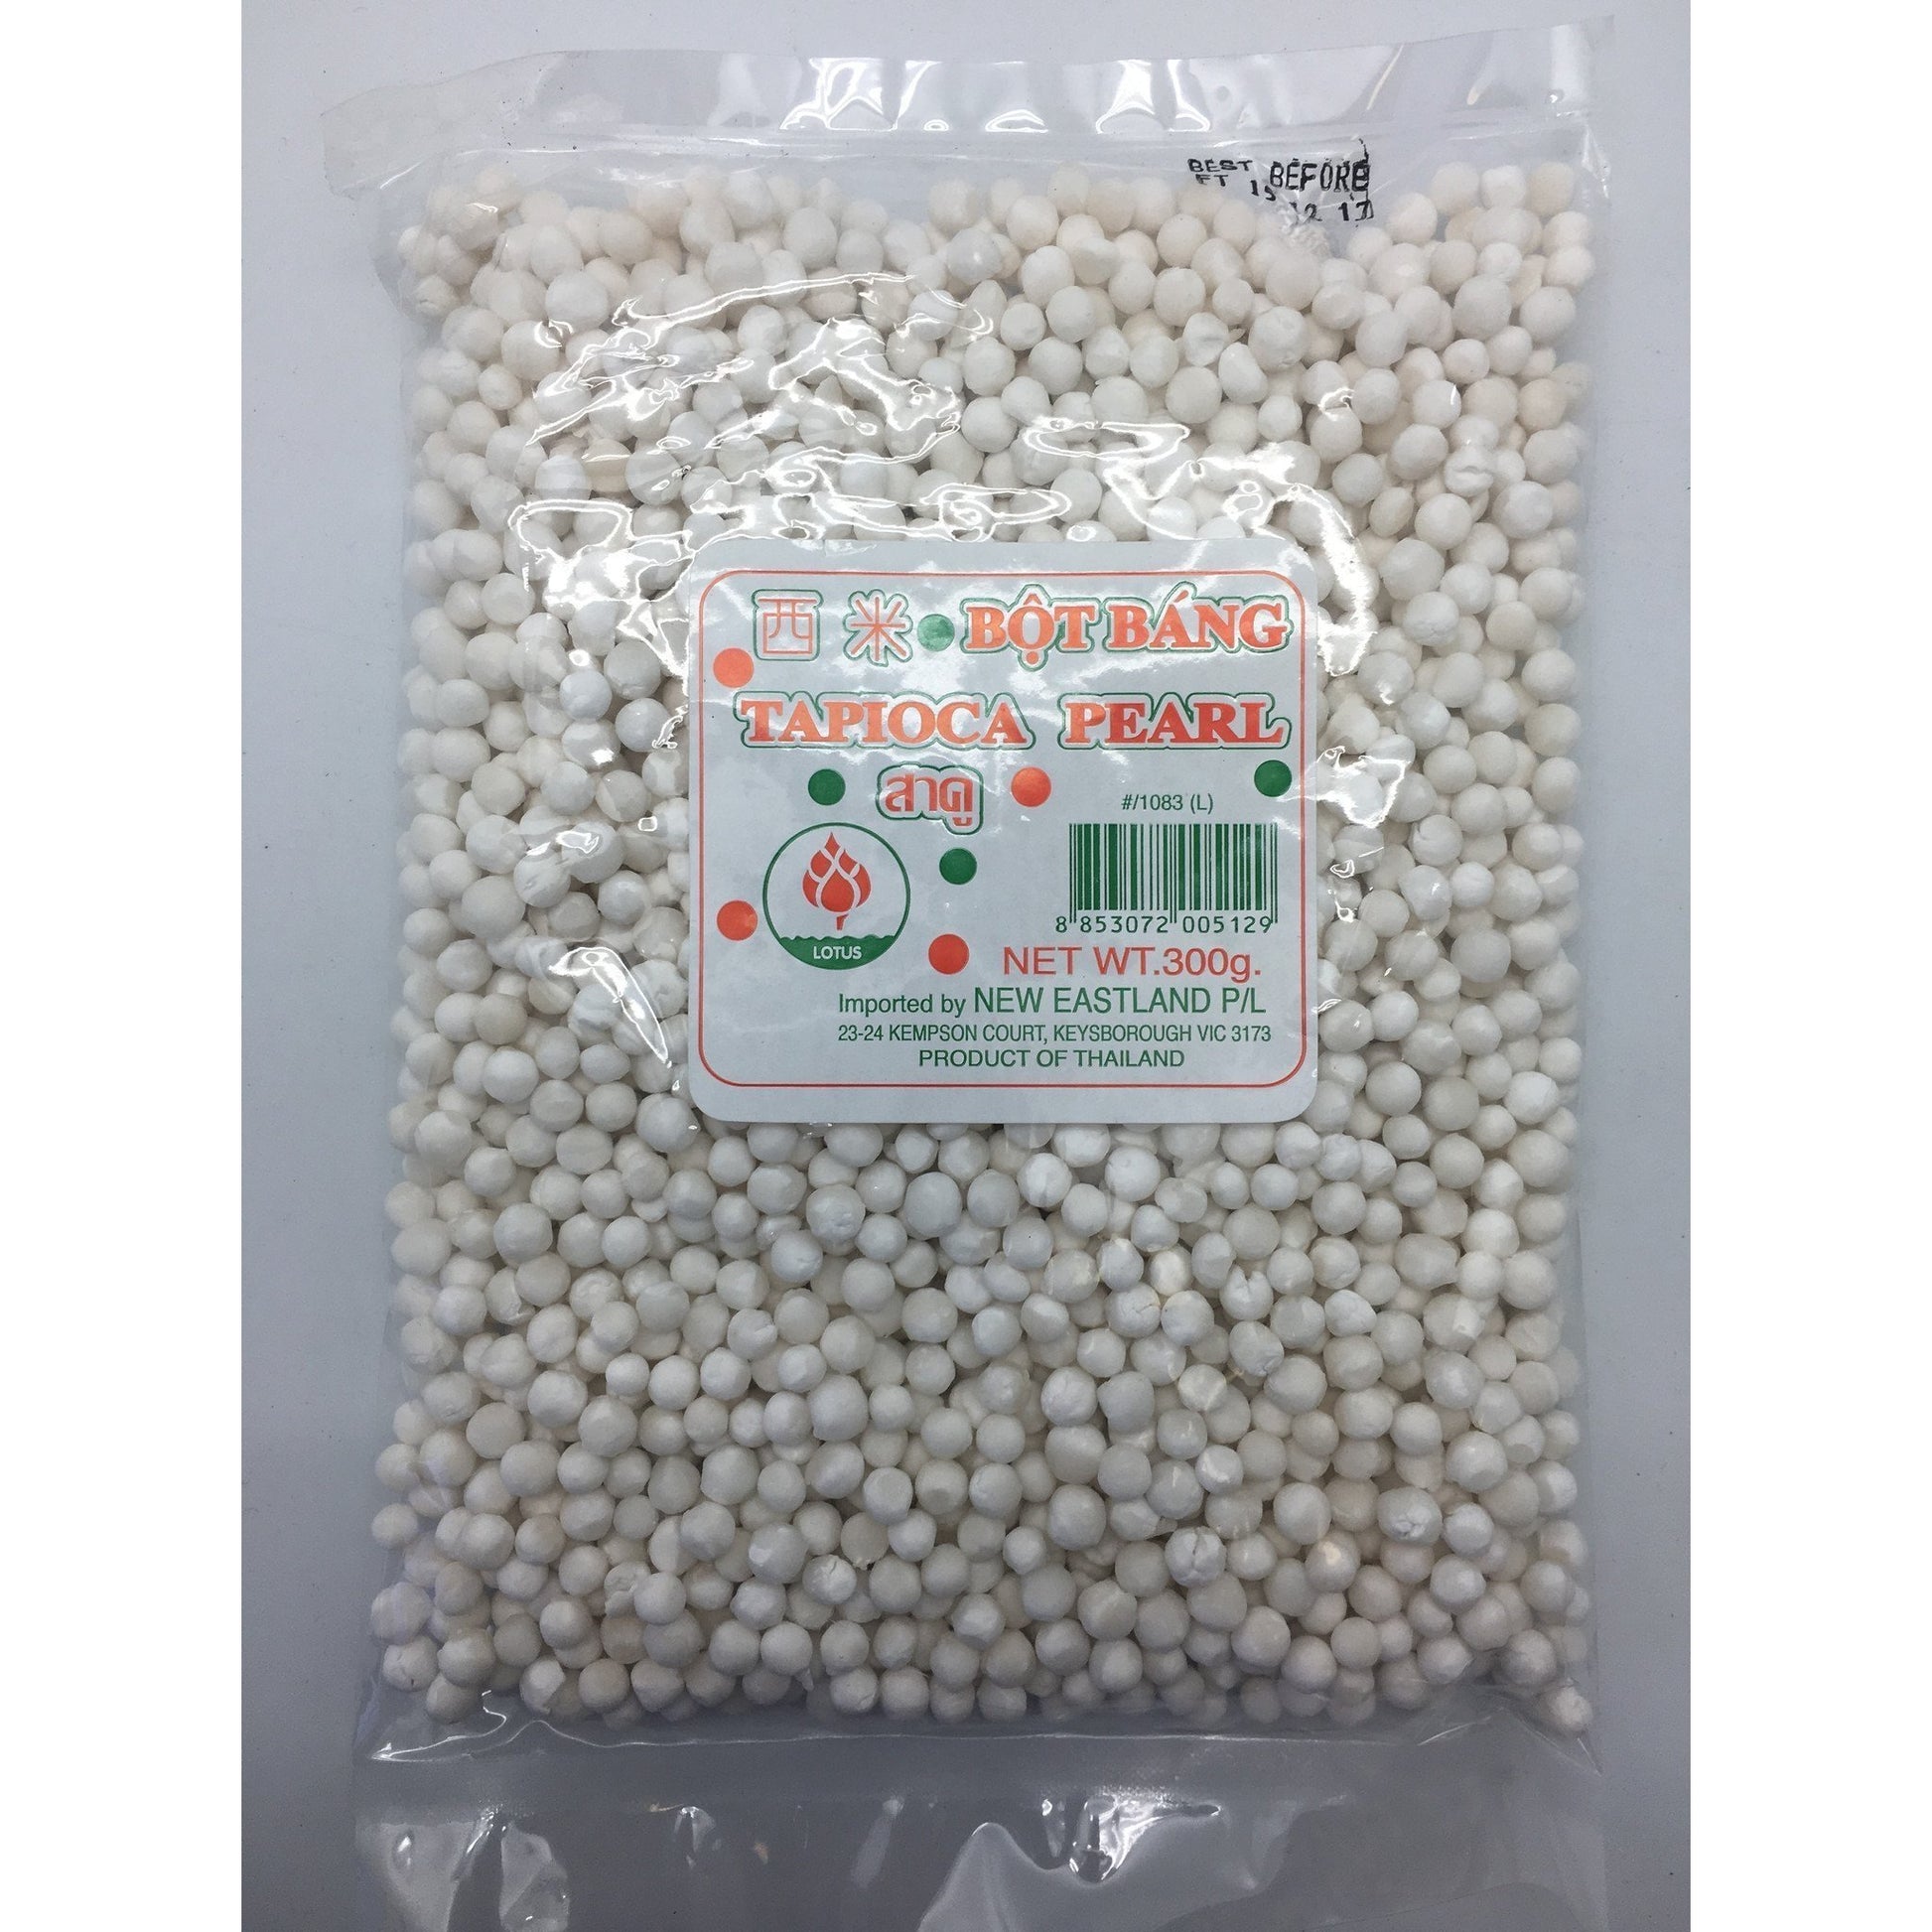 D217L Lotus Brand - Dried Tapioca pearls 300g - 50 bags / 1 CTN - New Eastland Pty Ltd - Asian food wholesalers